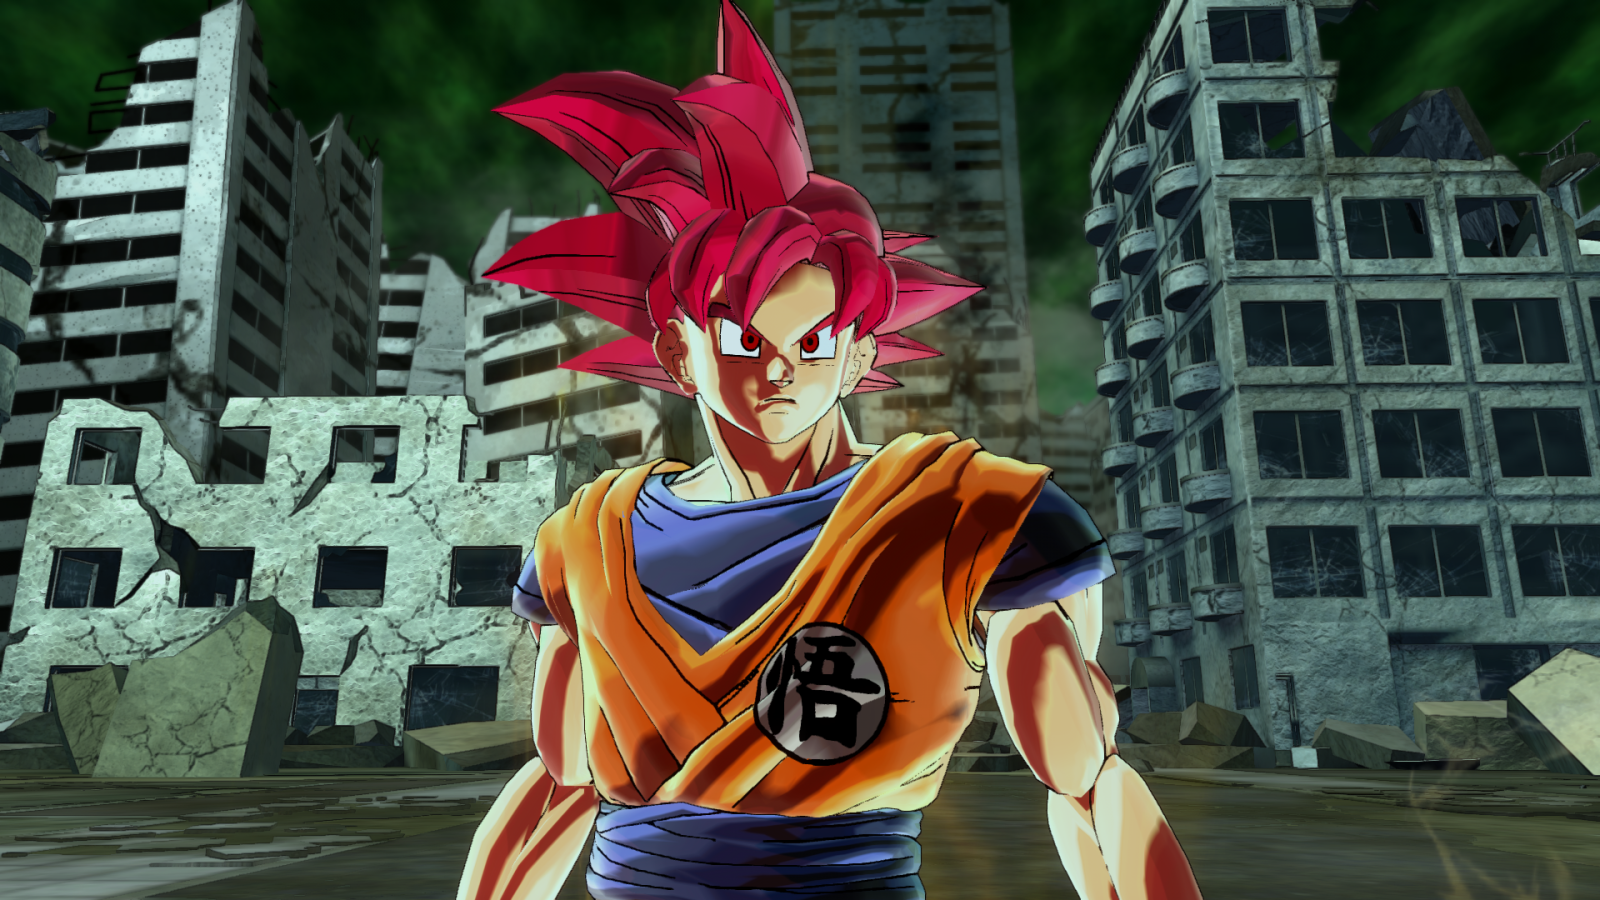 God Goku (Moveset) [Dragon Ball FighterZ] [Mods]